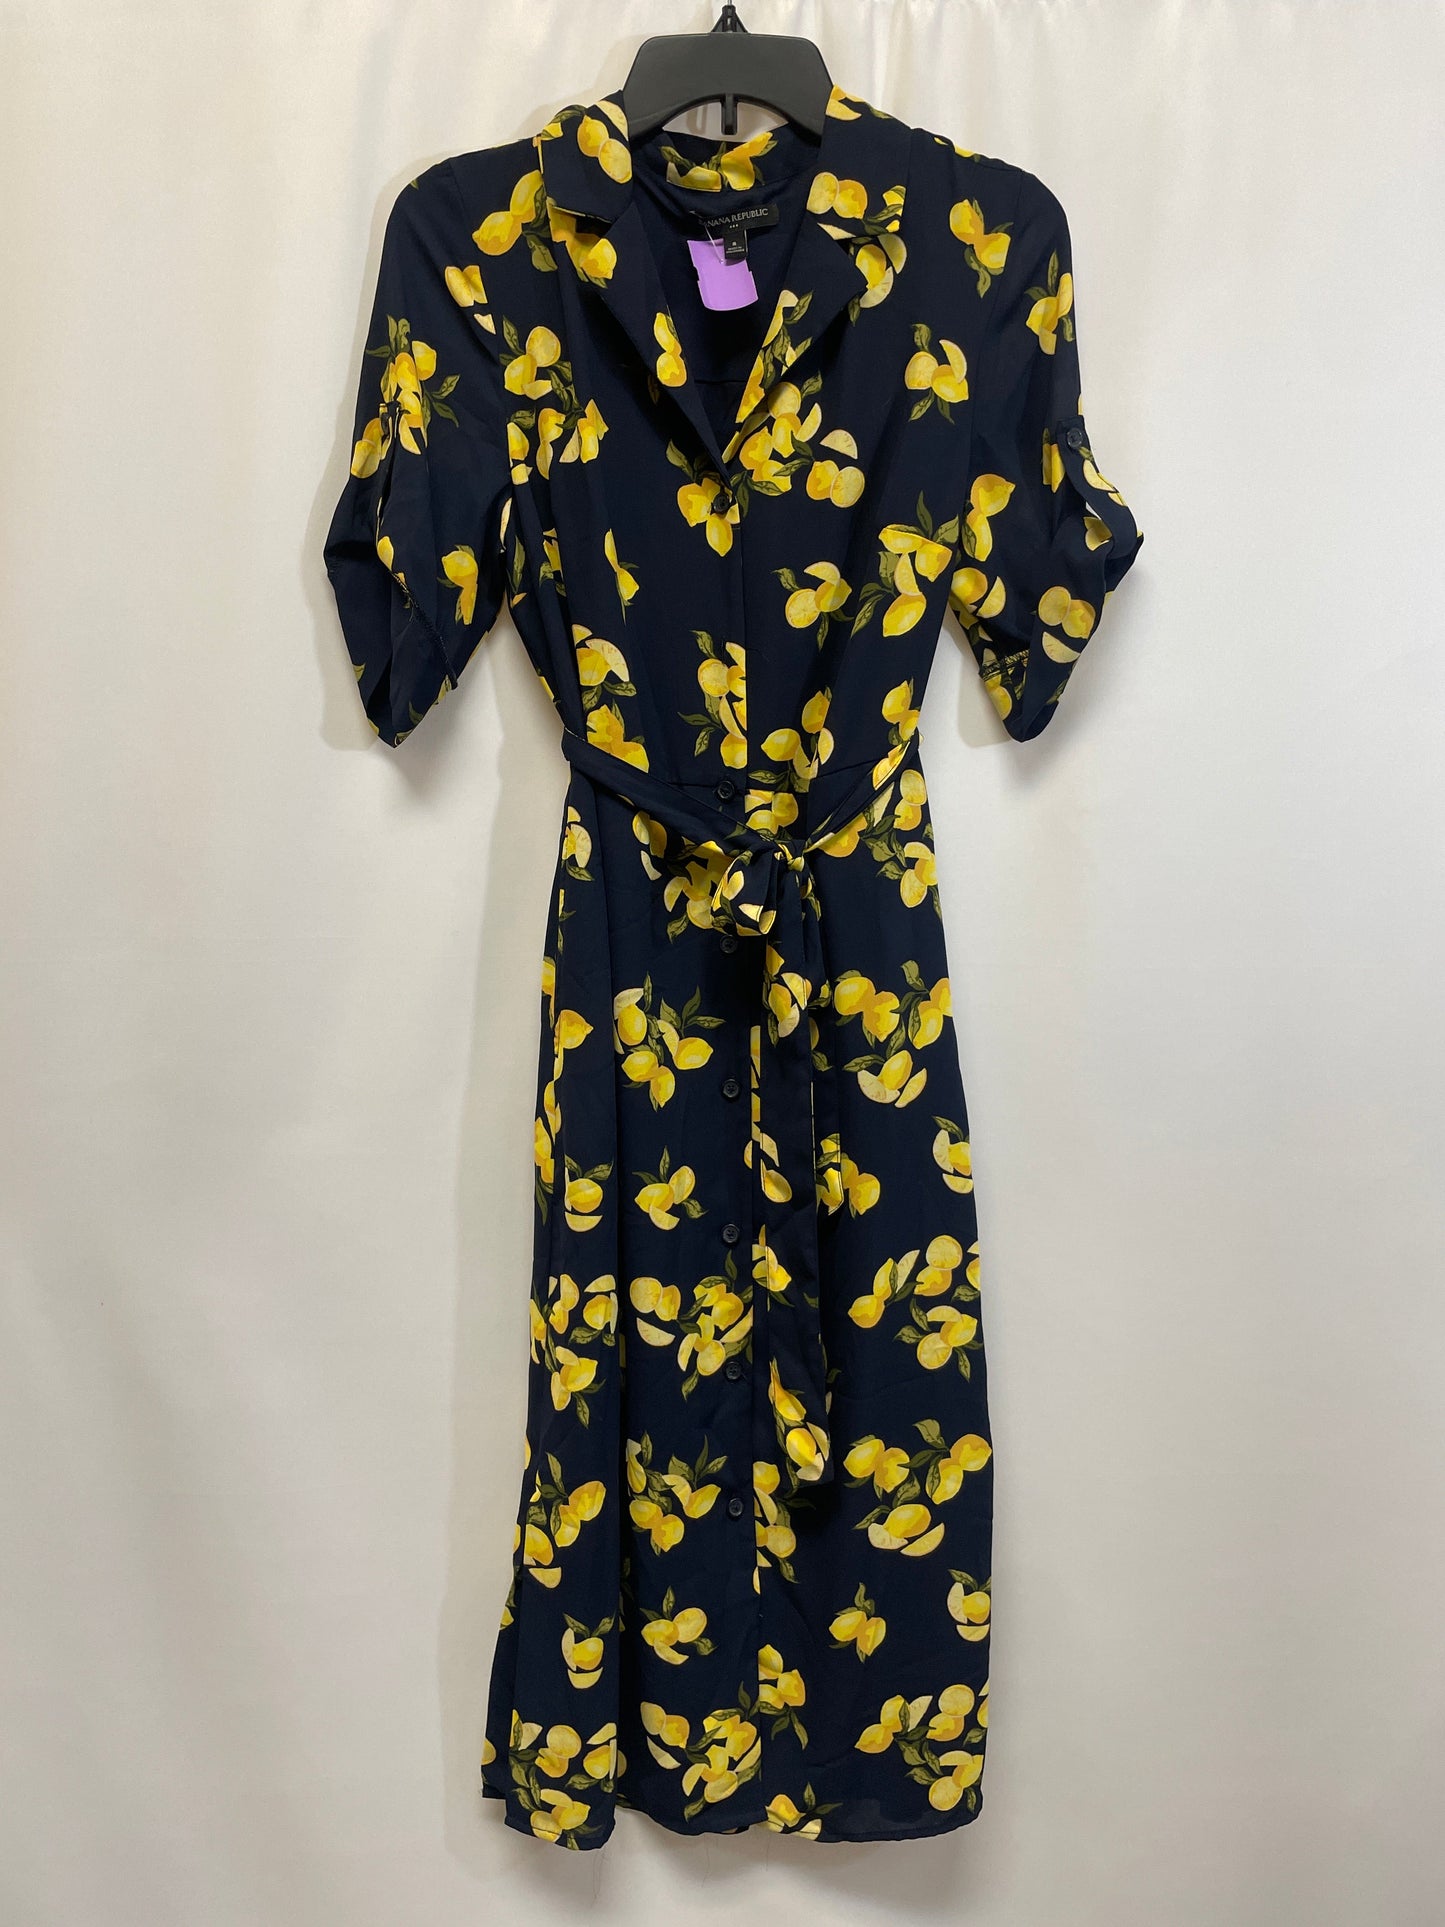 Blue & Yellow Dress Casual Midi Banana Republic, Size M